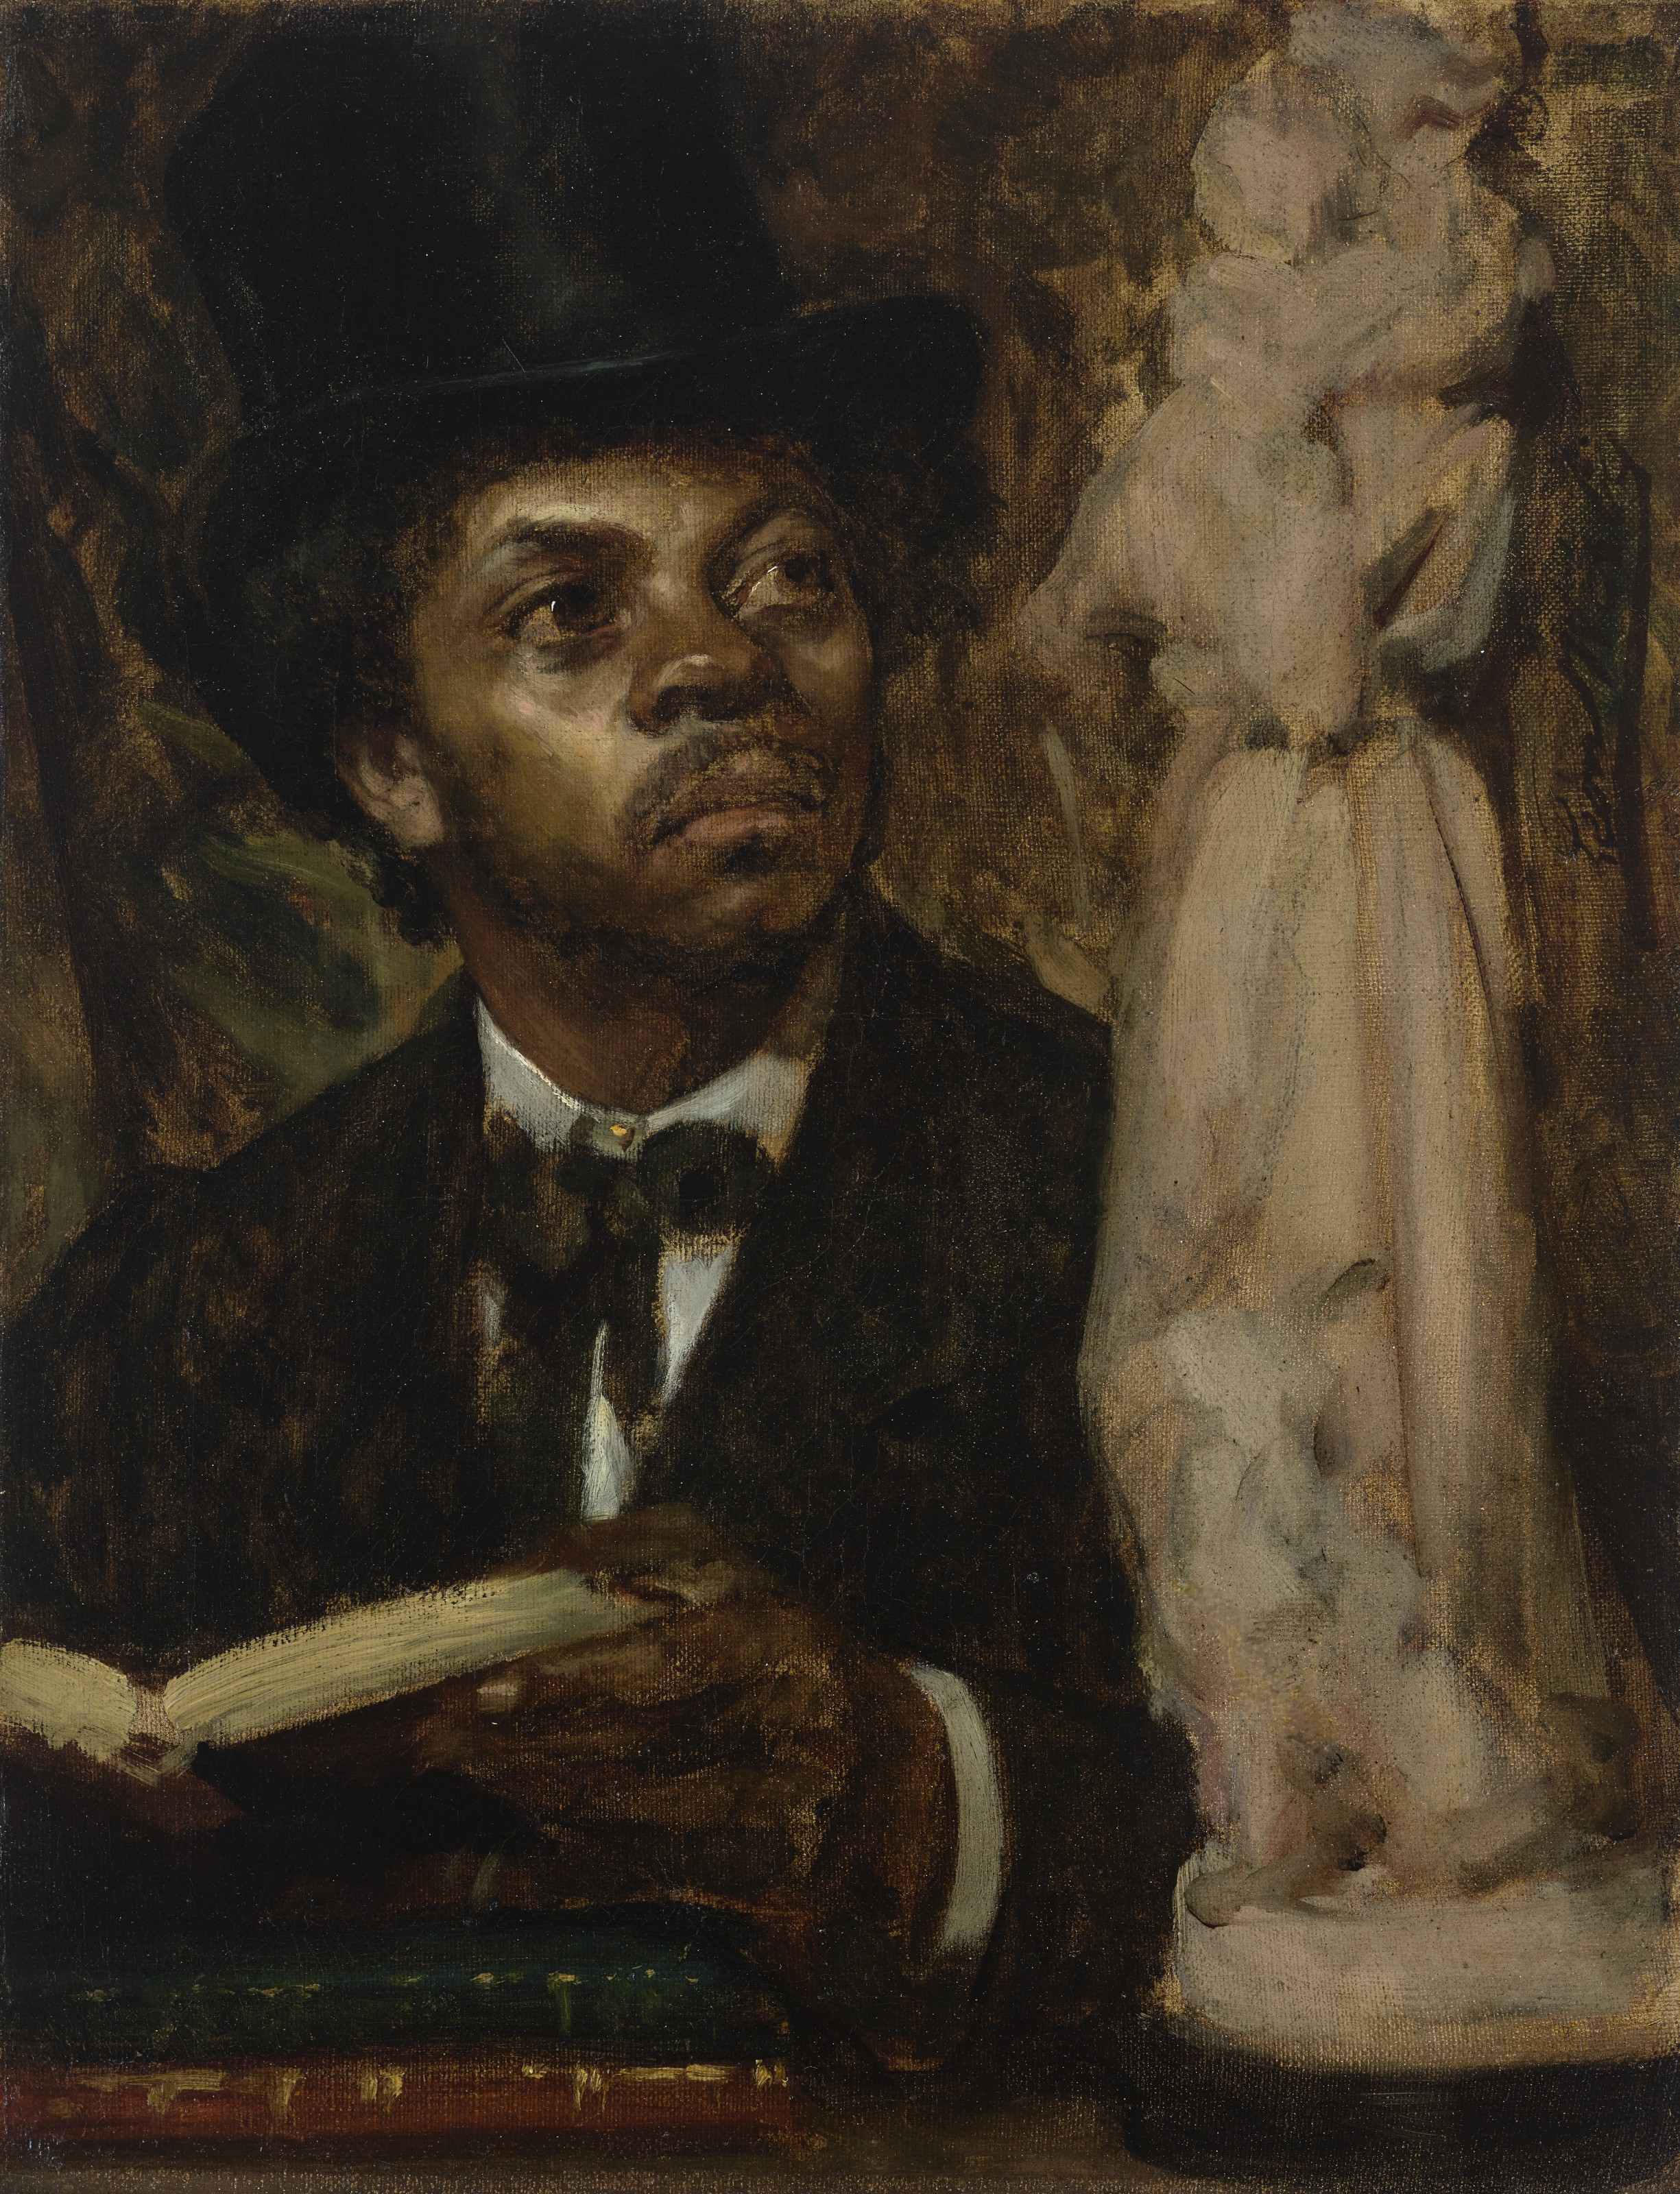 Portrait of an Art Connoisseur, possibly Ira Aldridge by Léon Herbo - c. 1900 - 37.5 x 29.2 cm. private collection